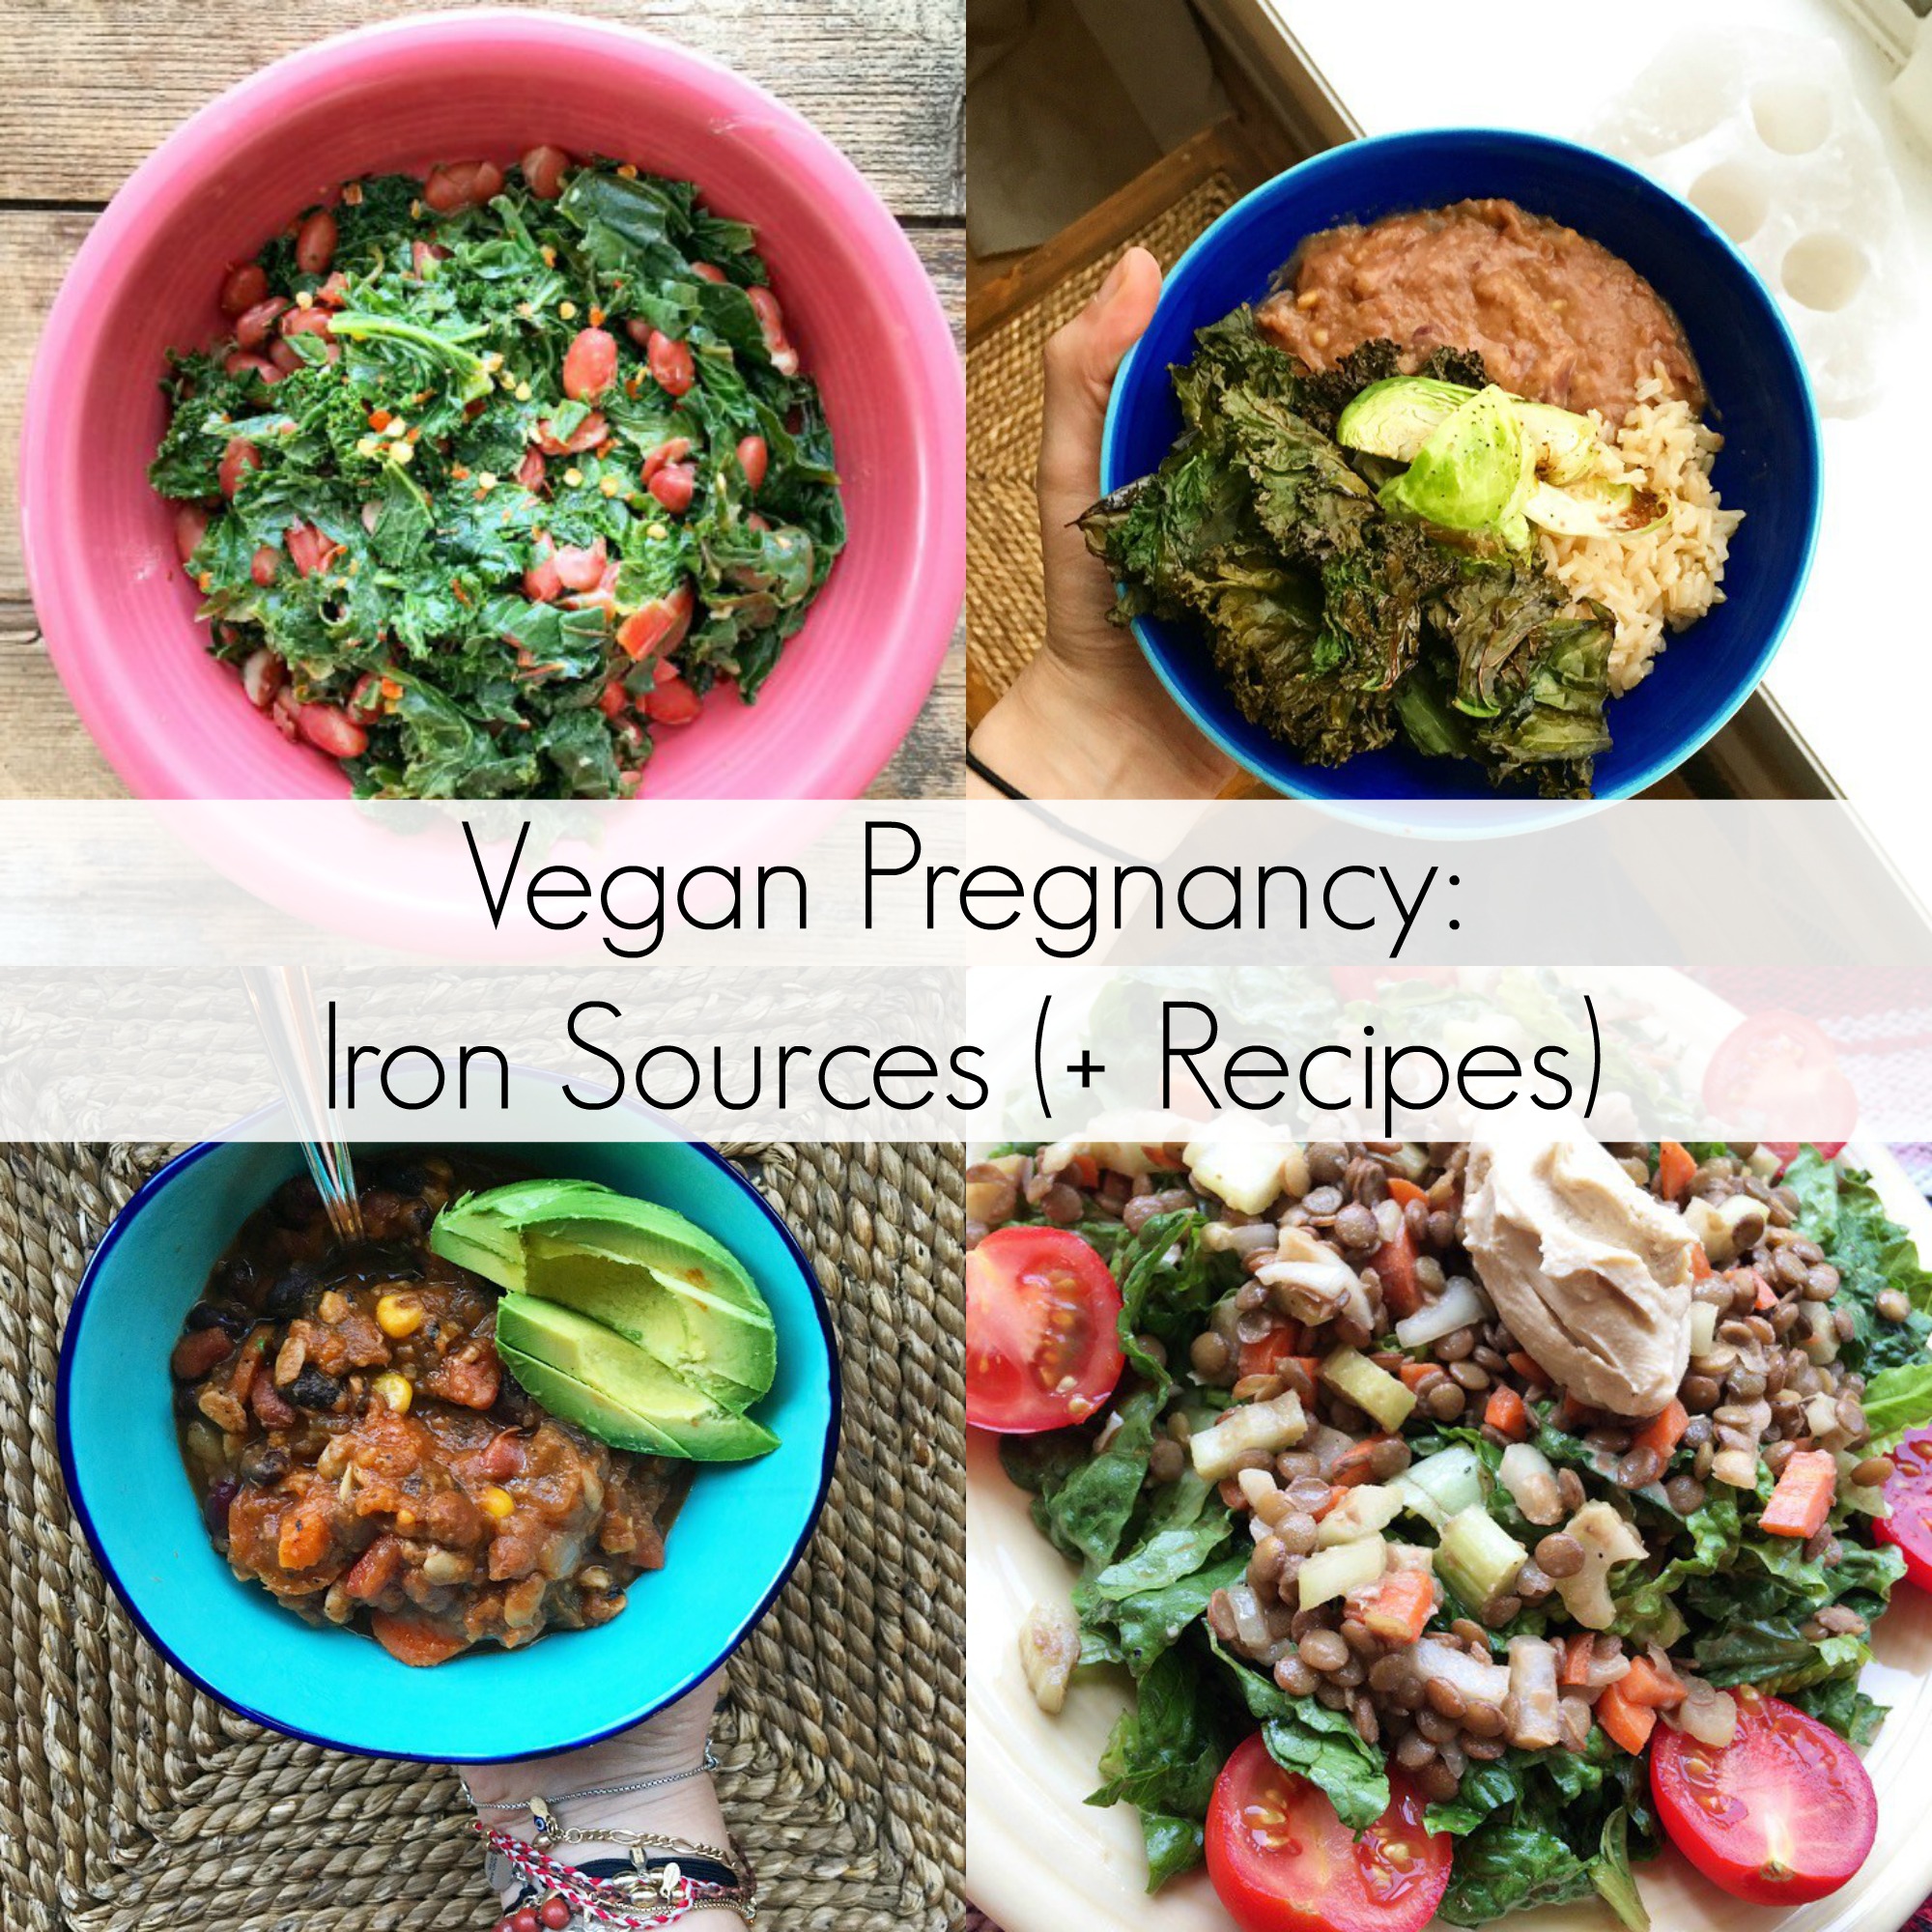 Vegan Pregnancy: Iron Sources (+ Recipes)